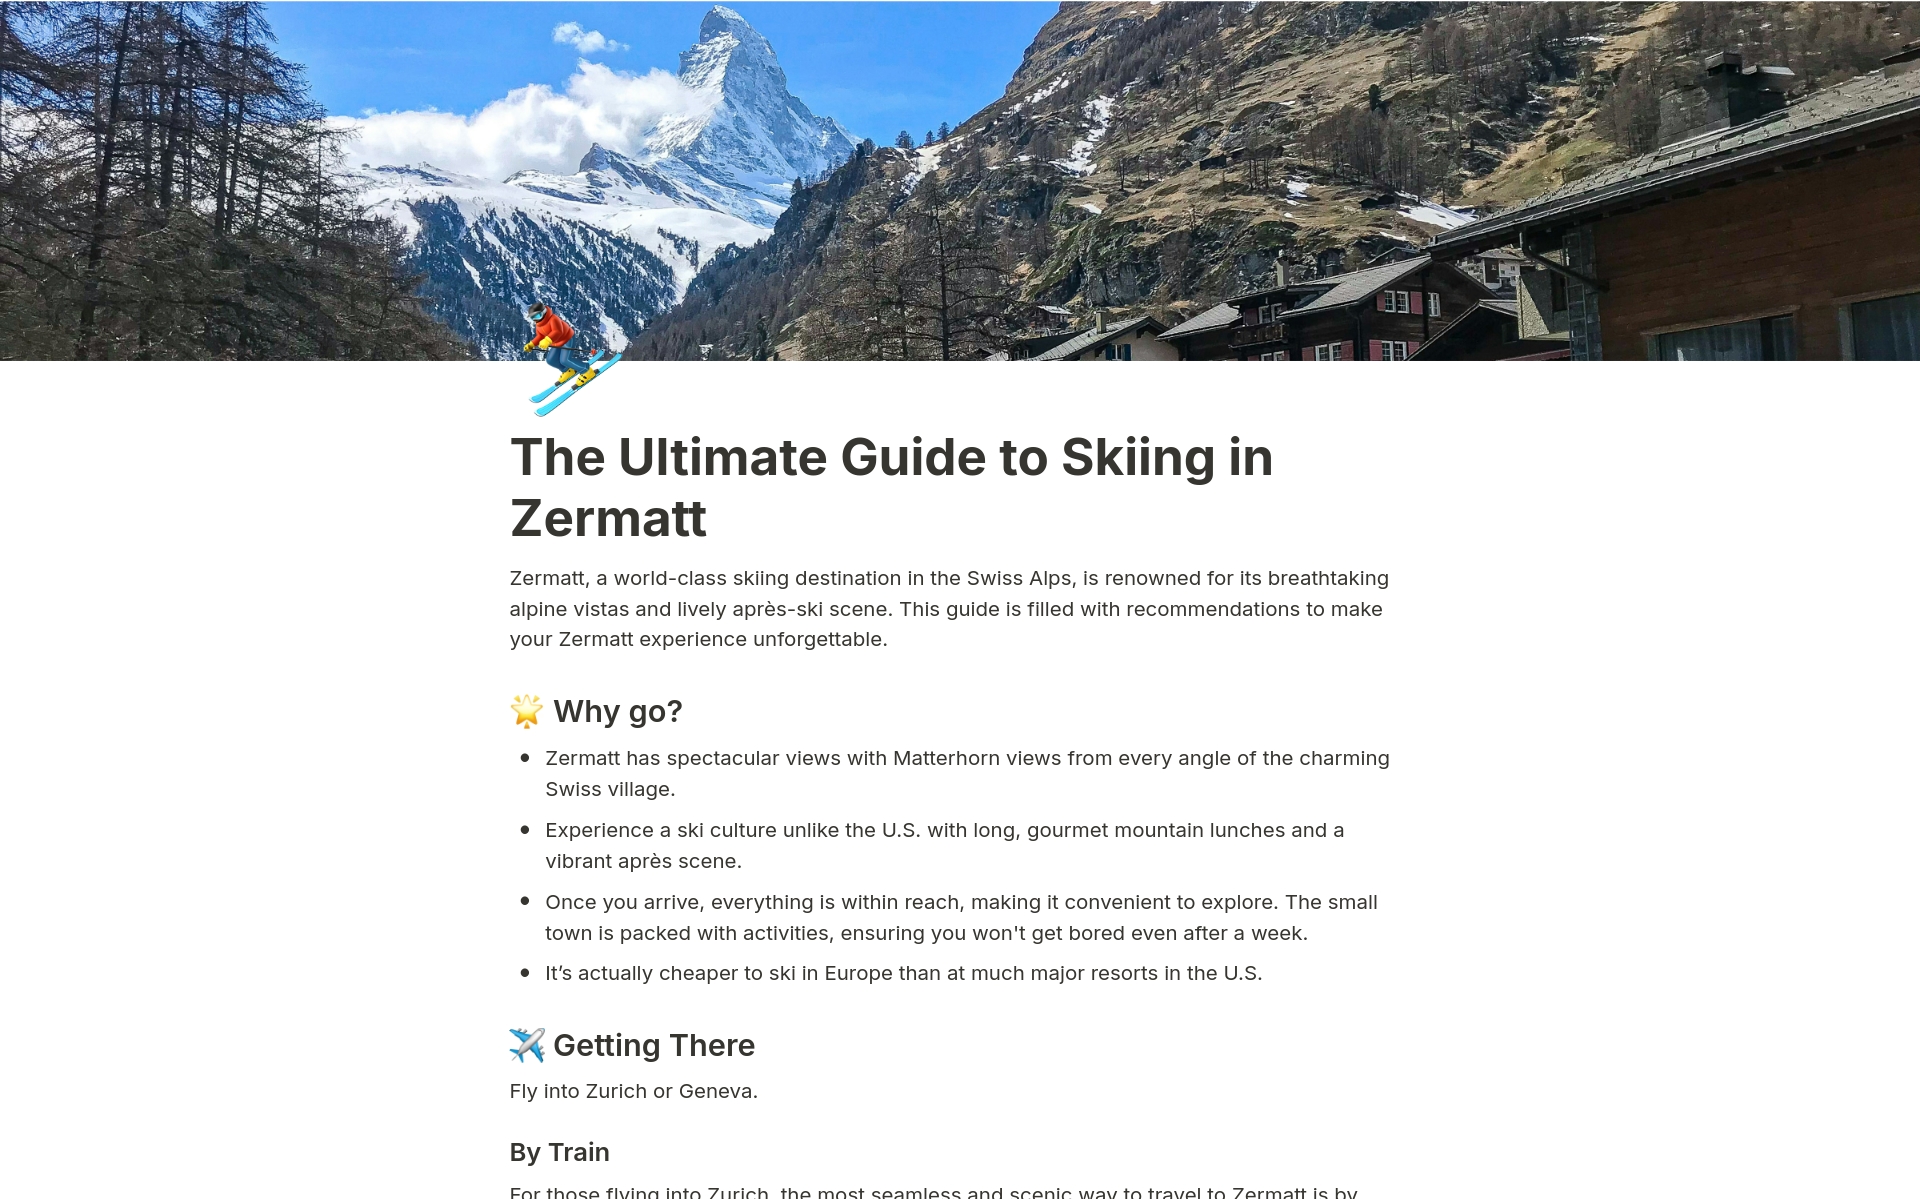 The Ultimate Guide to Skiing in Zermatt님의 템플릿 미리보기